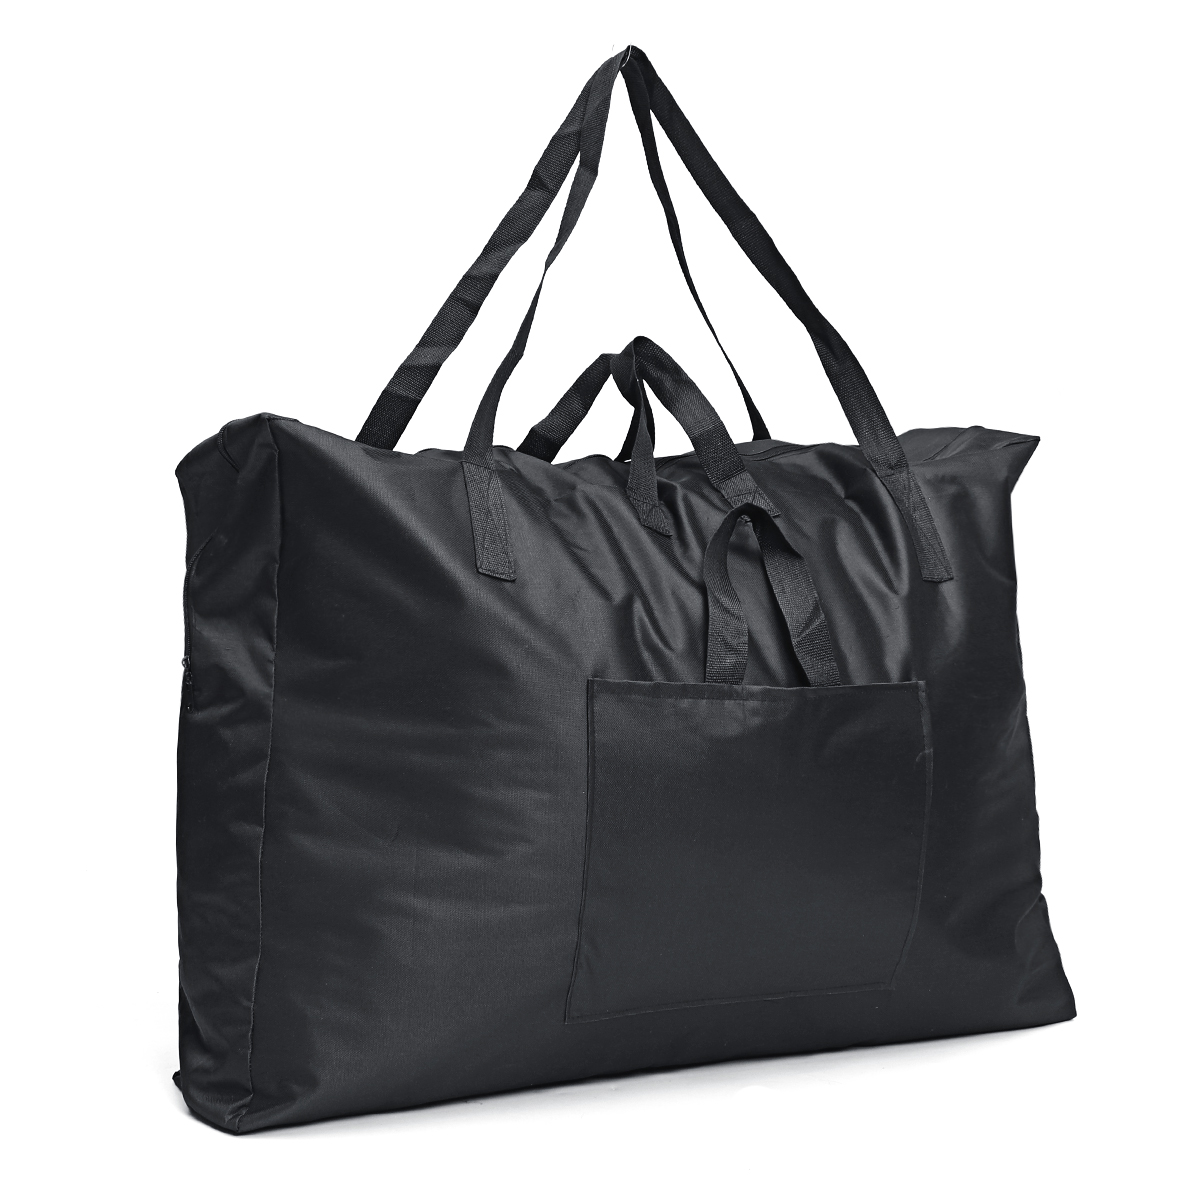 

Portable Carry Bag Storage Foldable Handbag Tote Luggage Shopping Organizer